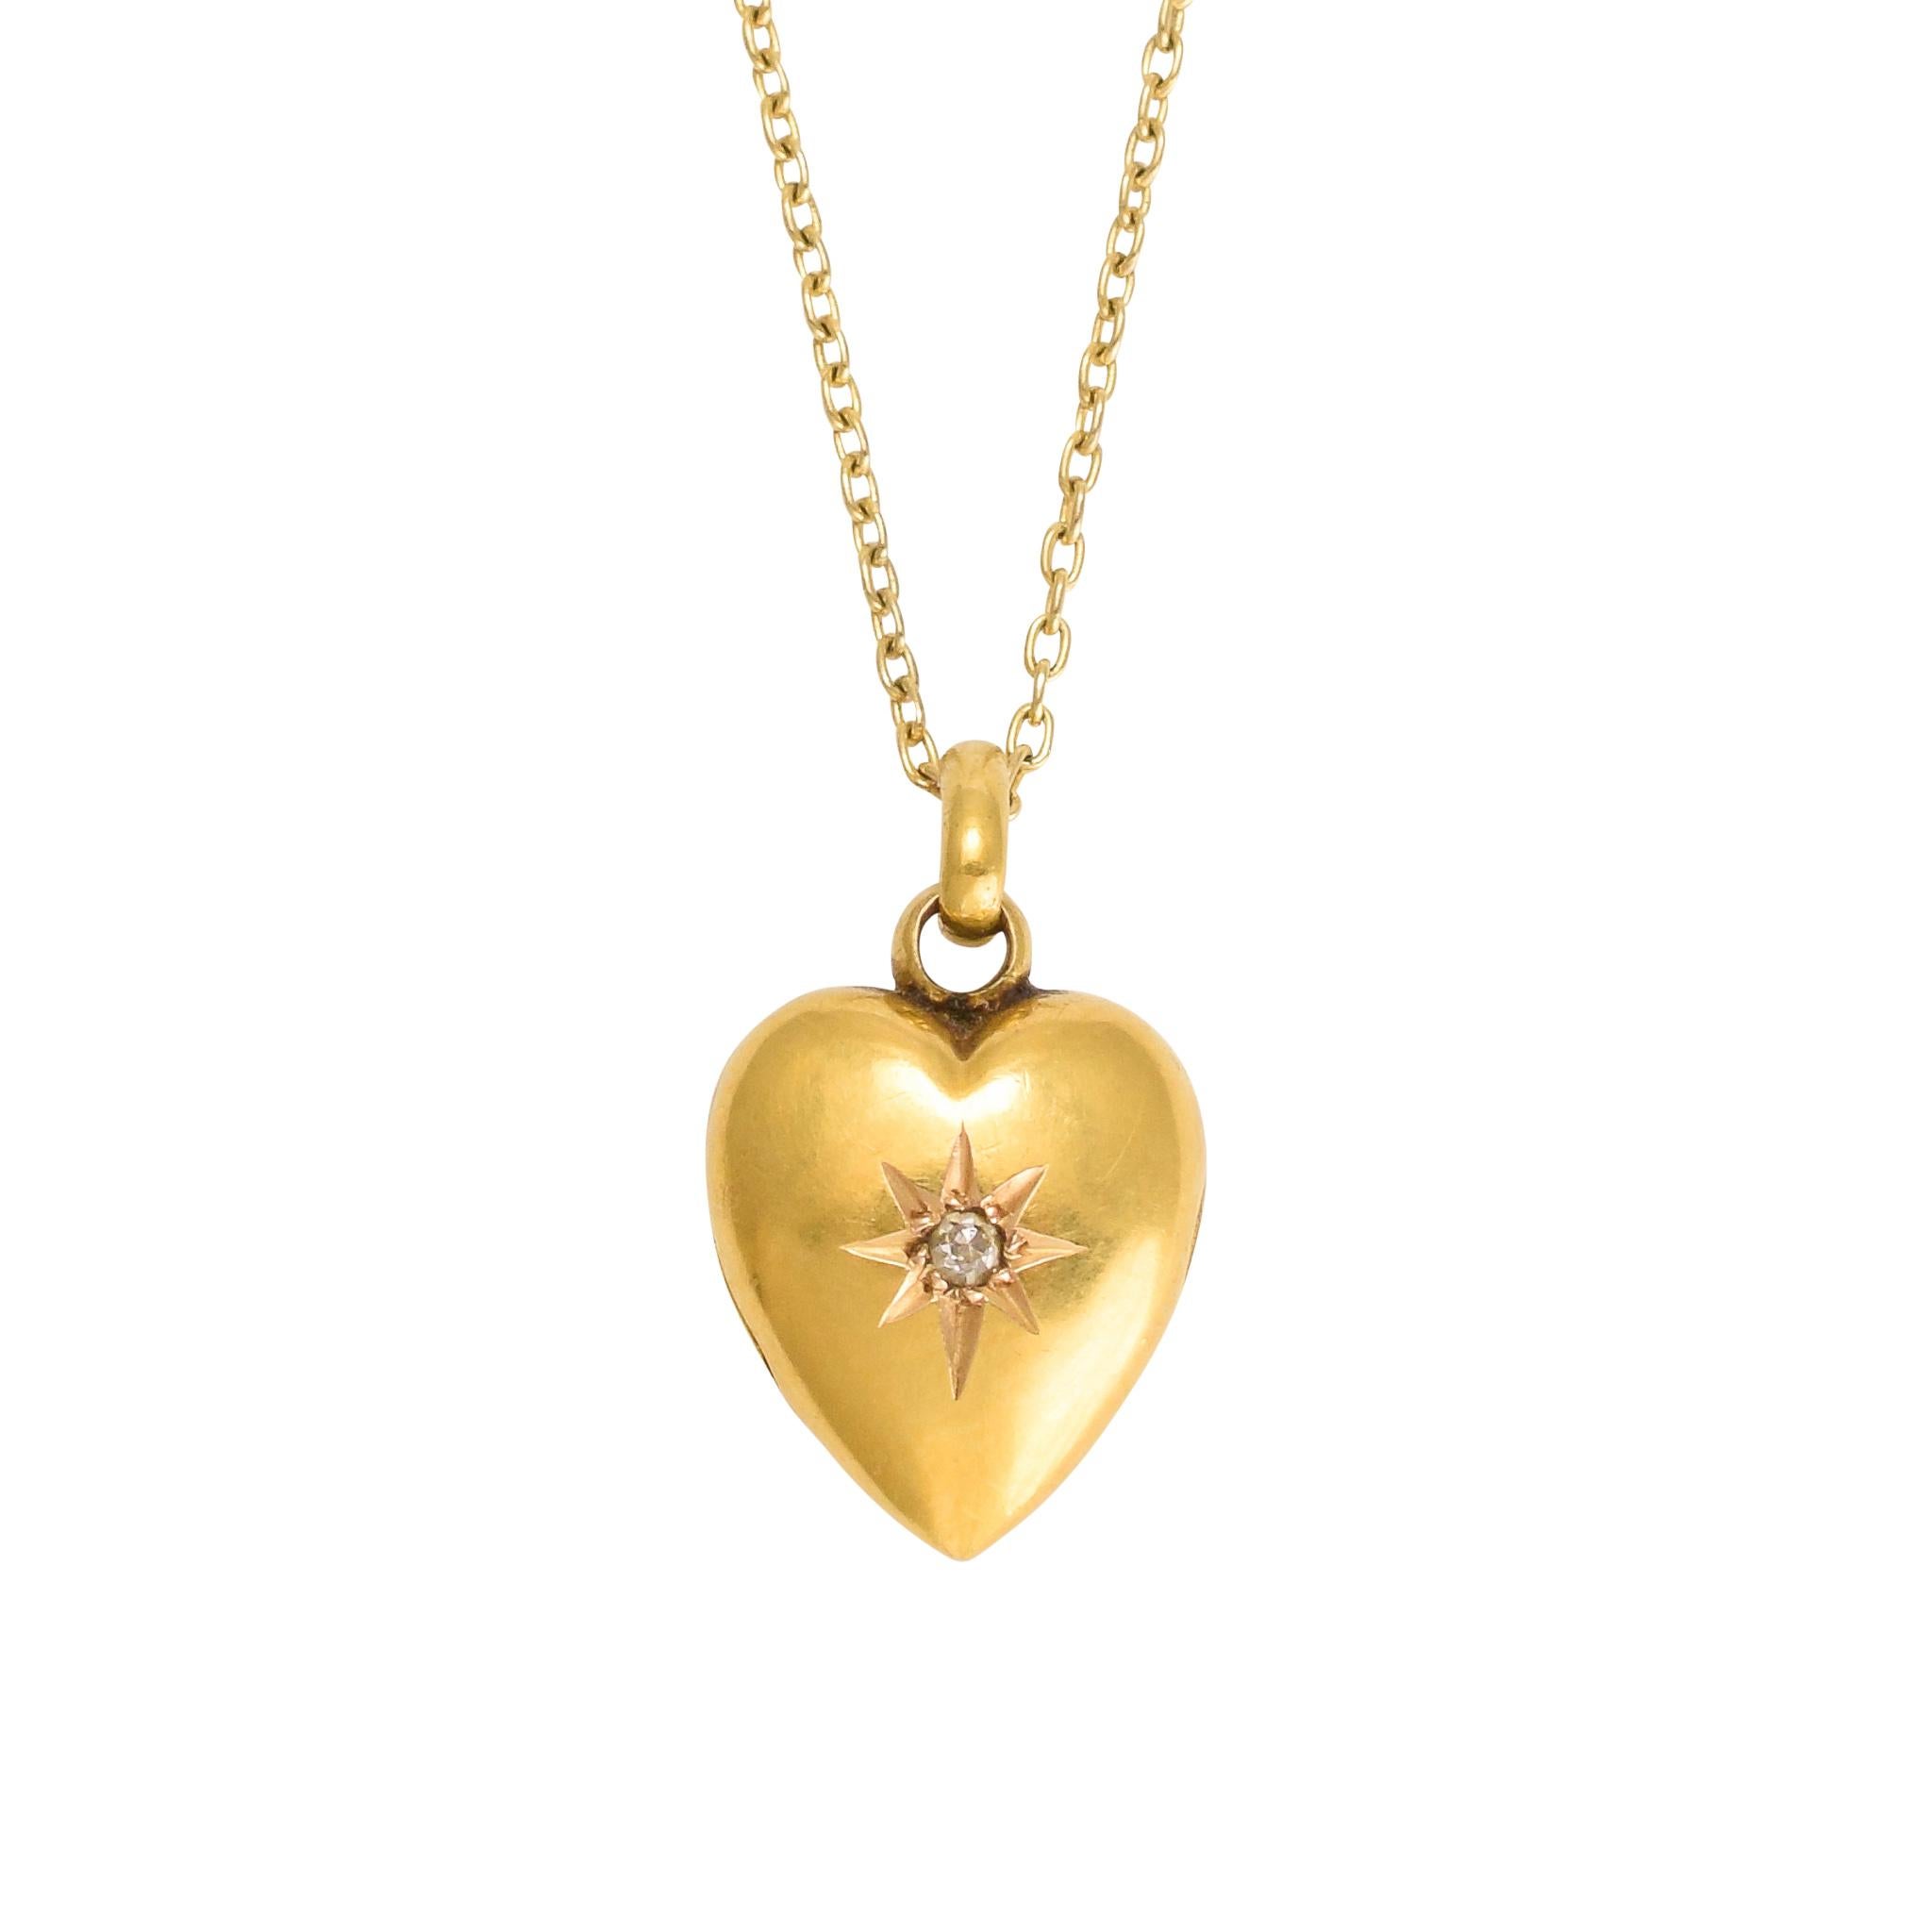 Antique Edwardian Diamond Puffed Heart Locket